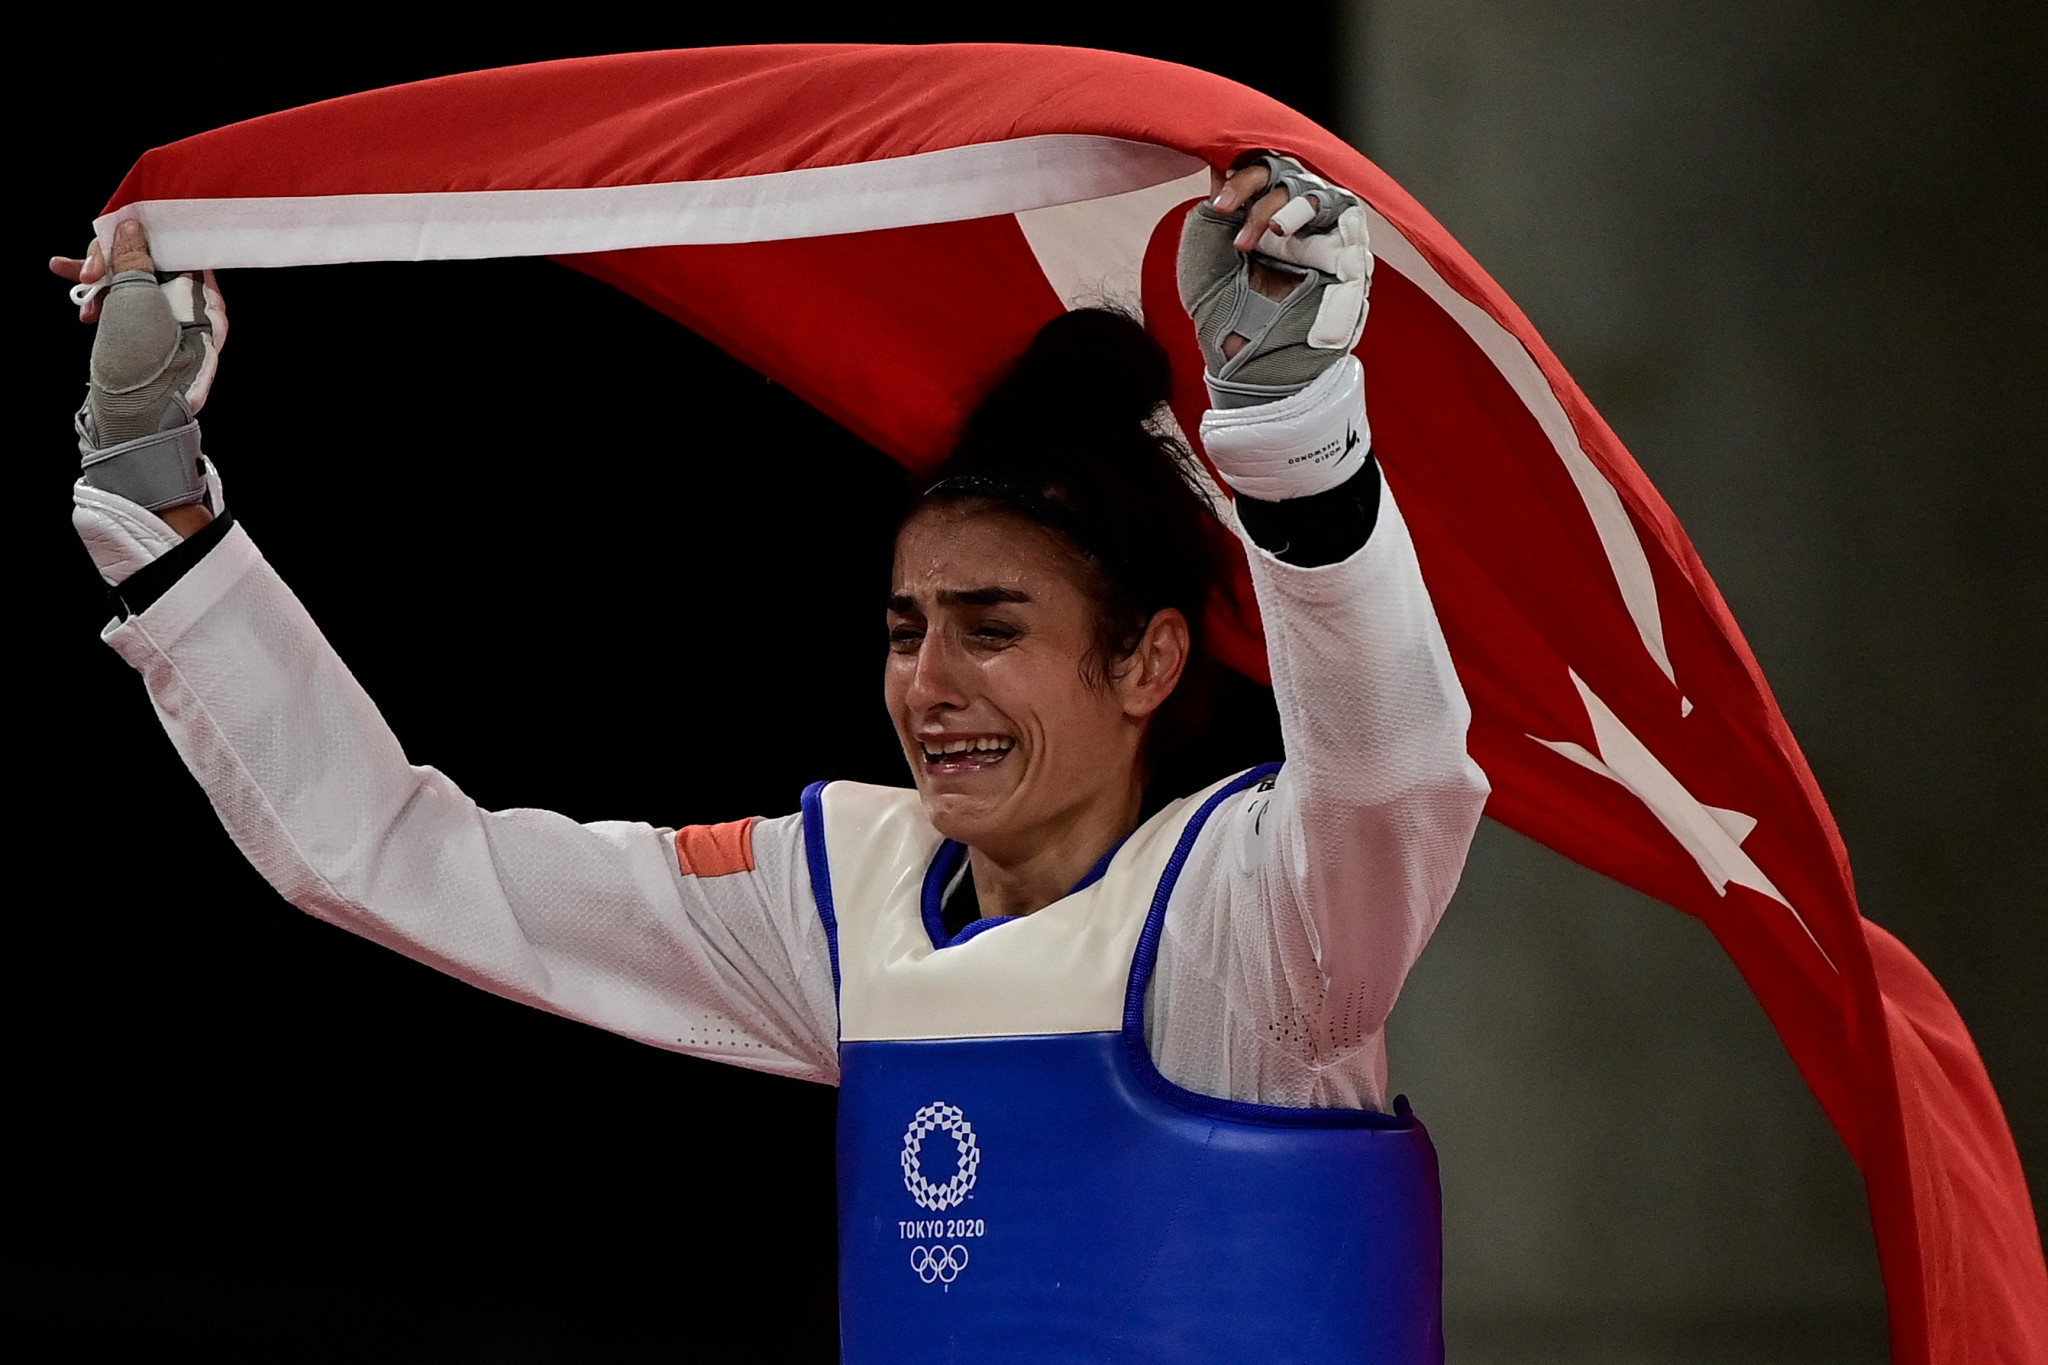 Double delight for Turkey on last day of European Taekwondo Championships